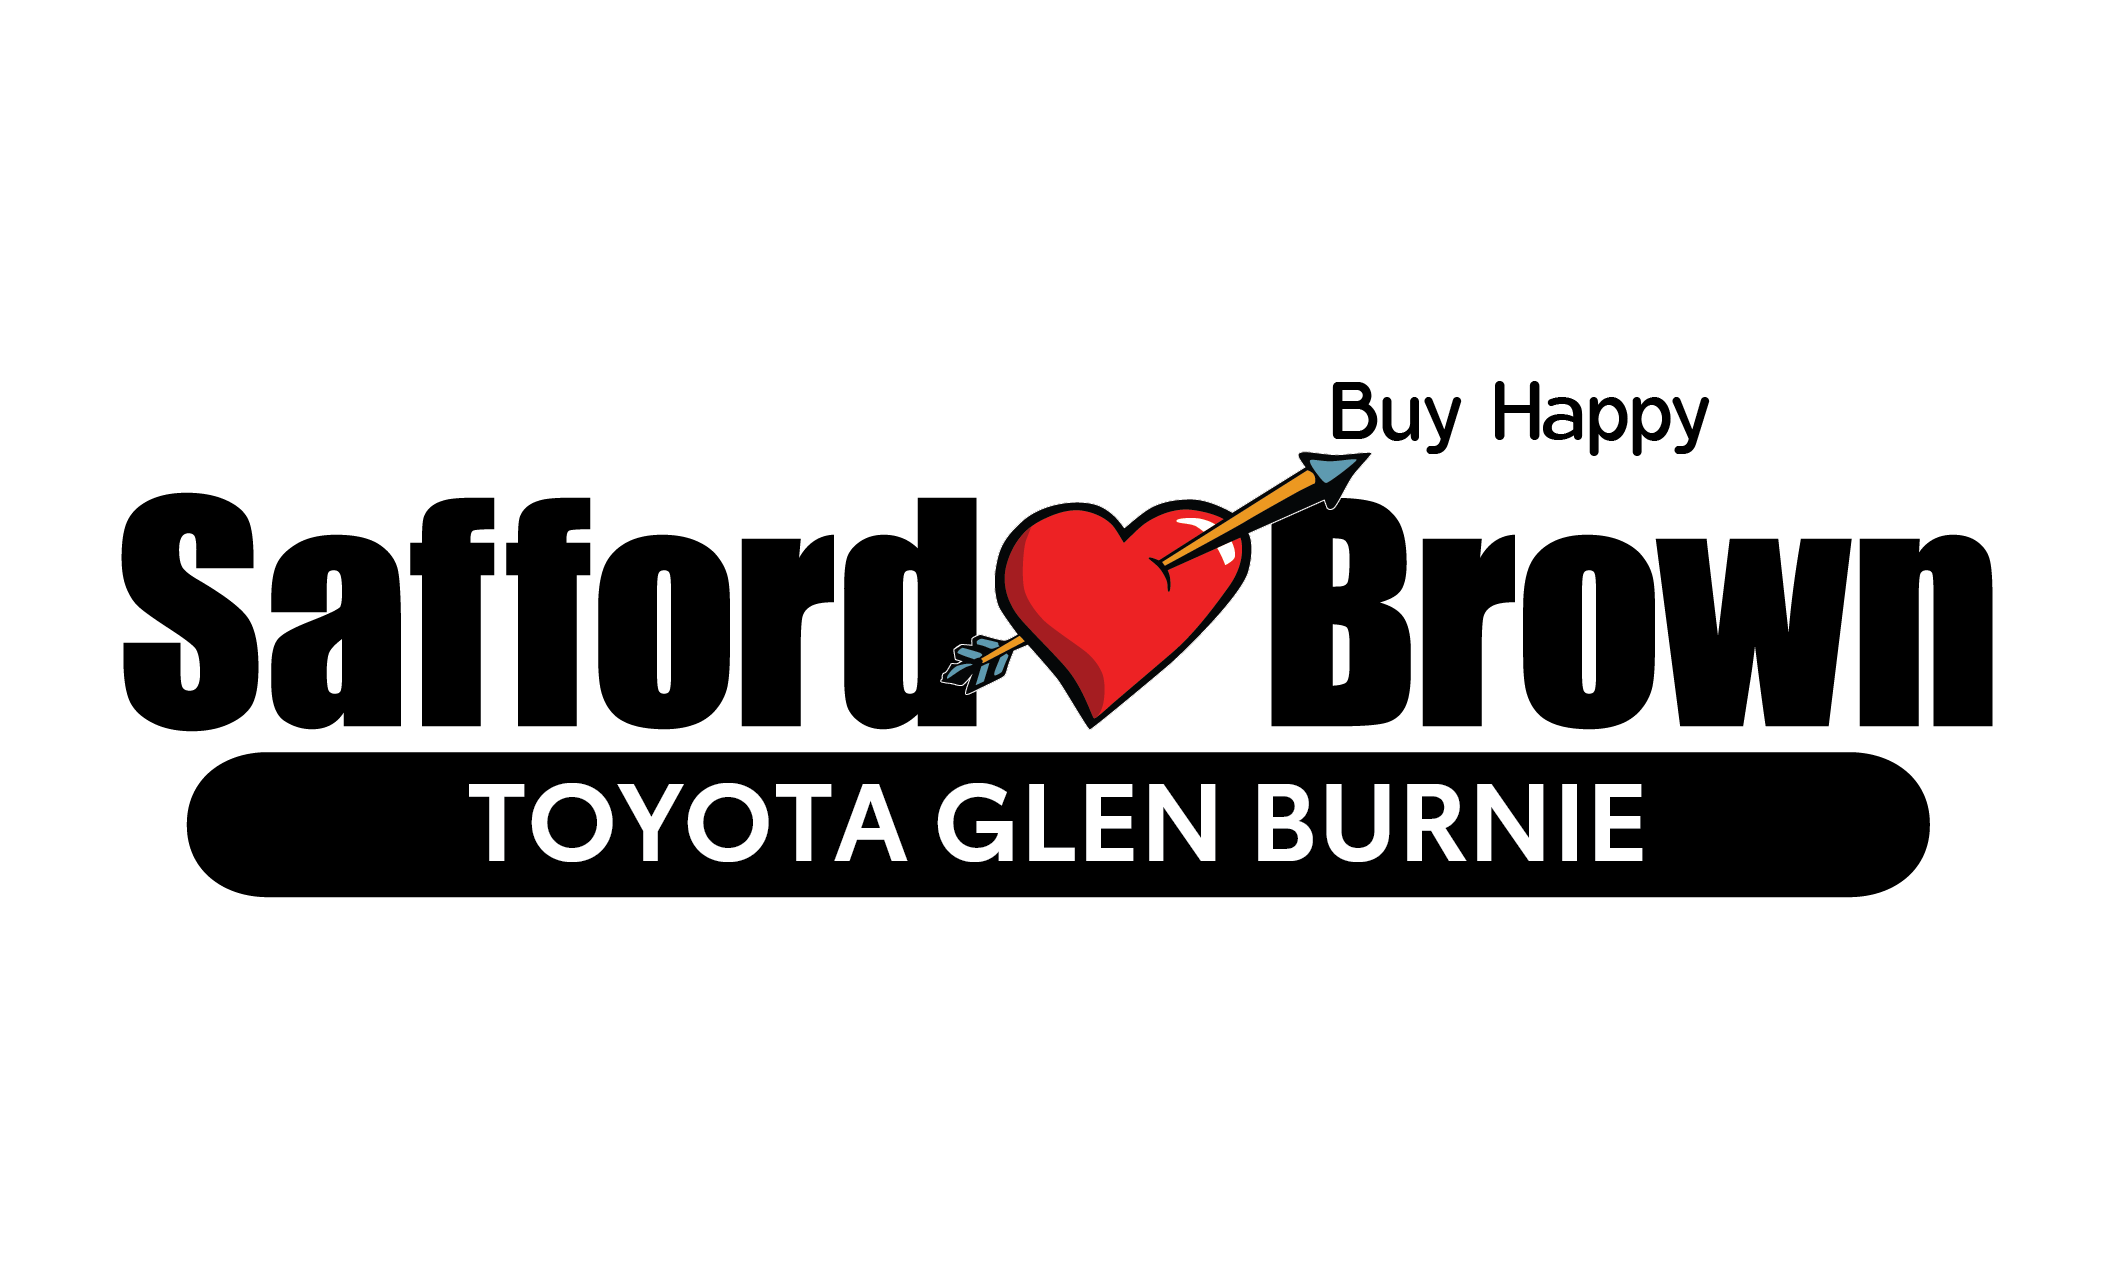 Safford Brown Toyota Glen Burnie_4C, 1C & BW Heart Logos-FINAL (1)-01.png